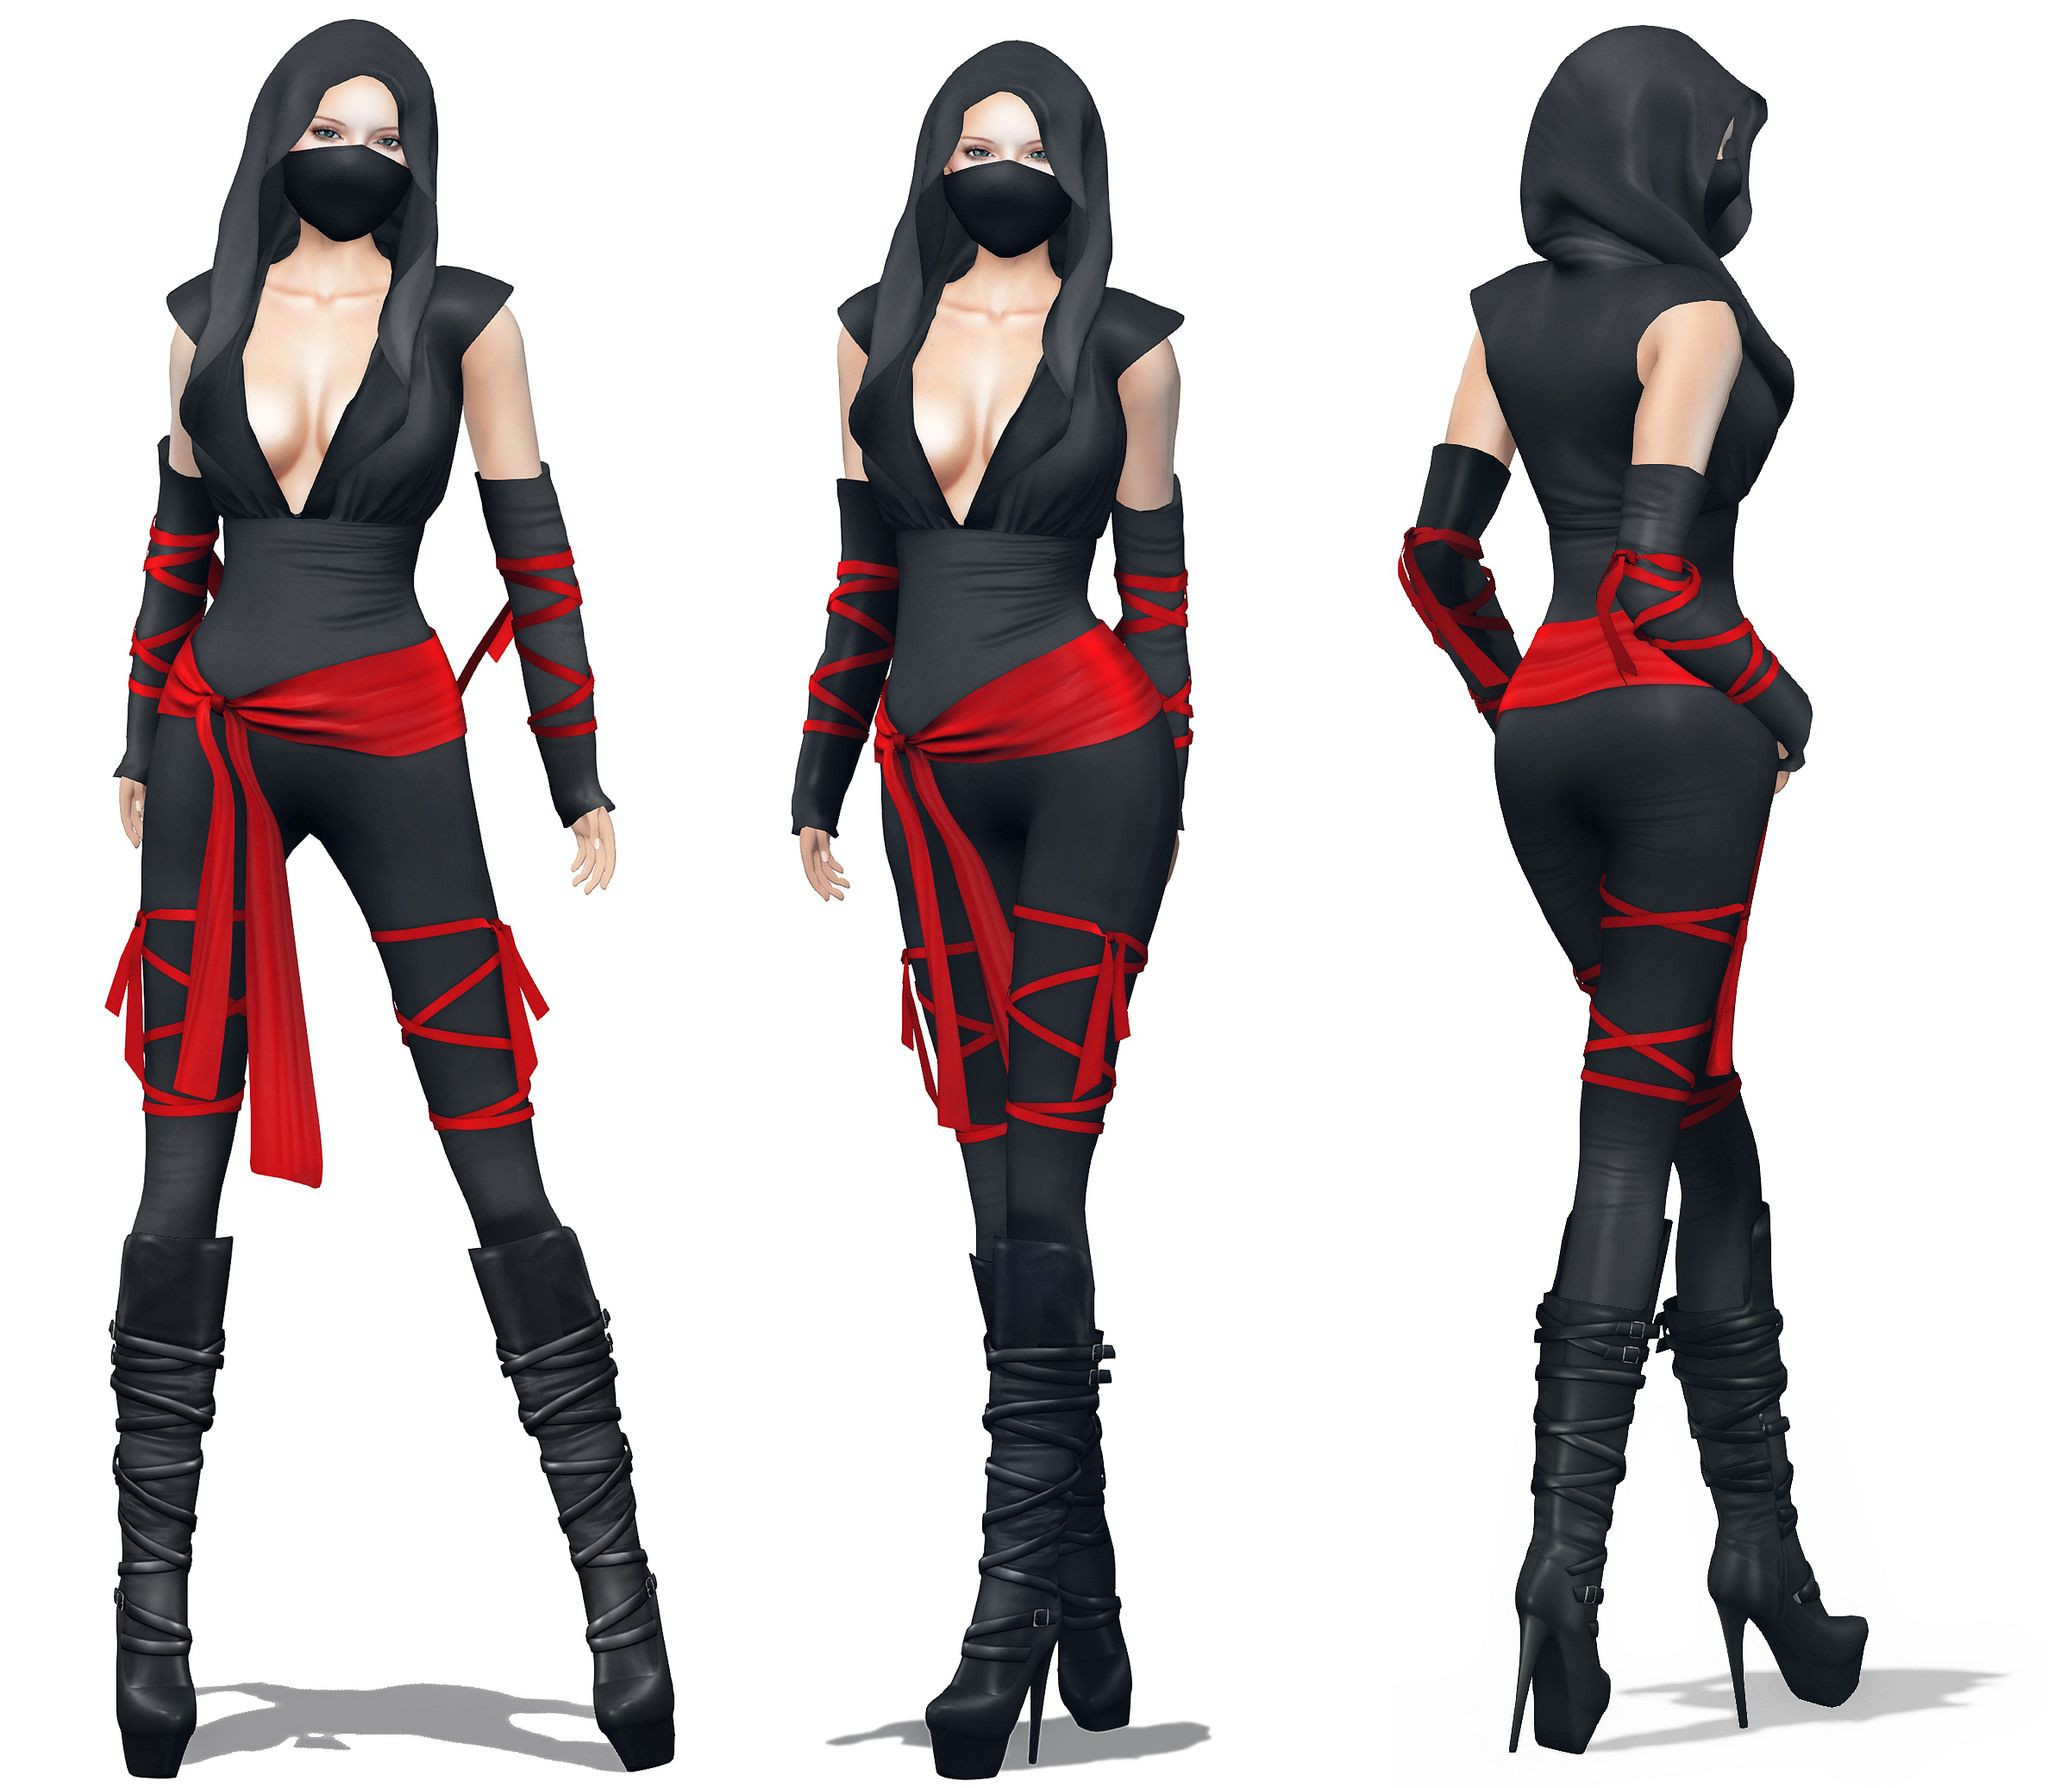 Best ideas about DIY Woman Ninja Costume
. Save or Pin Womens Ninja Costume Now.